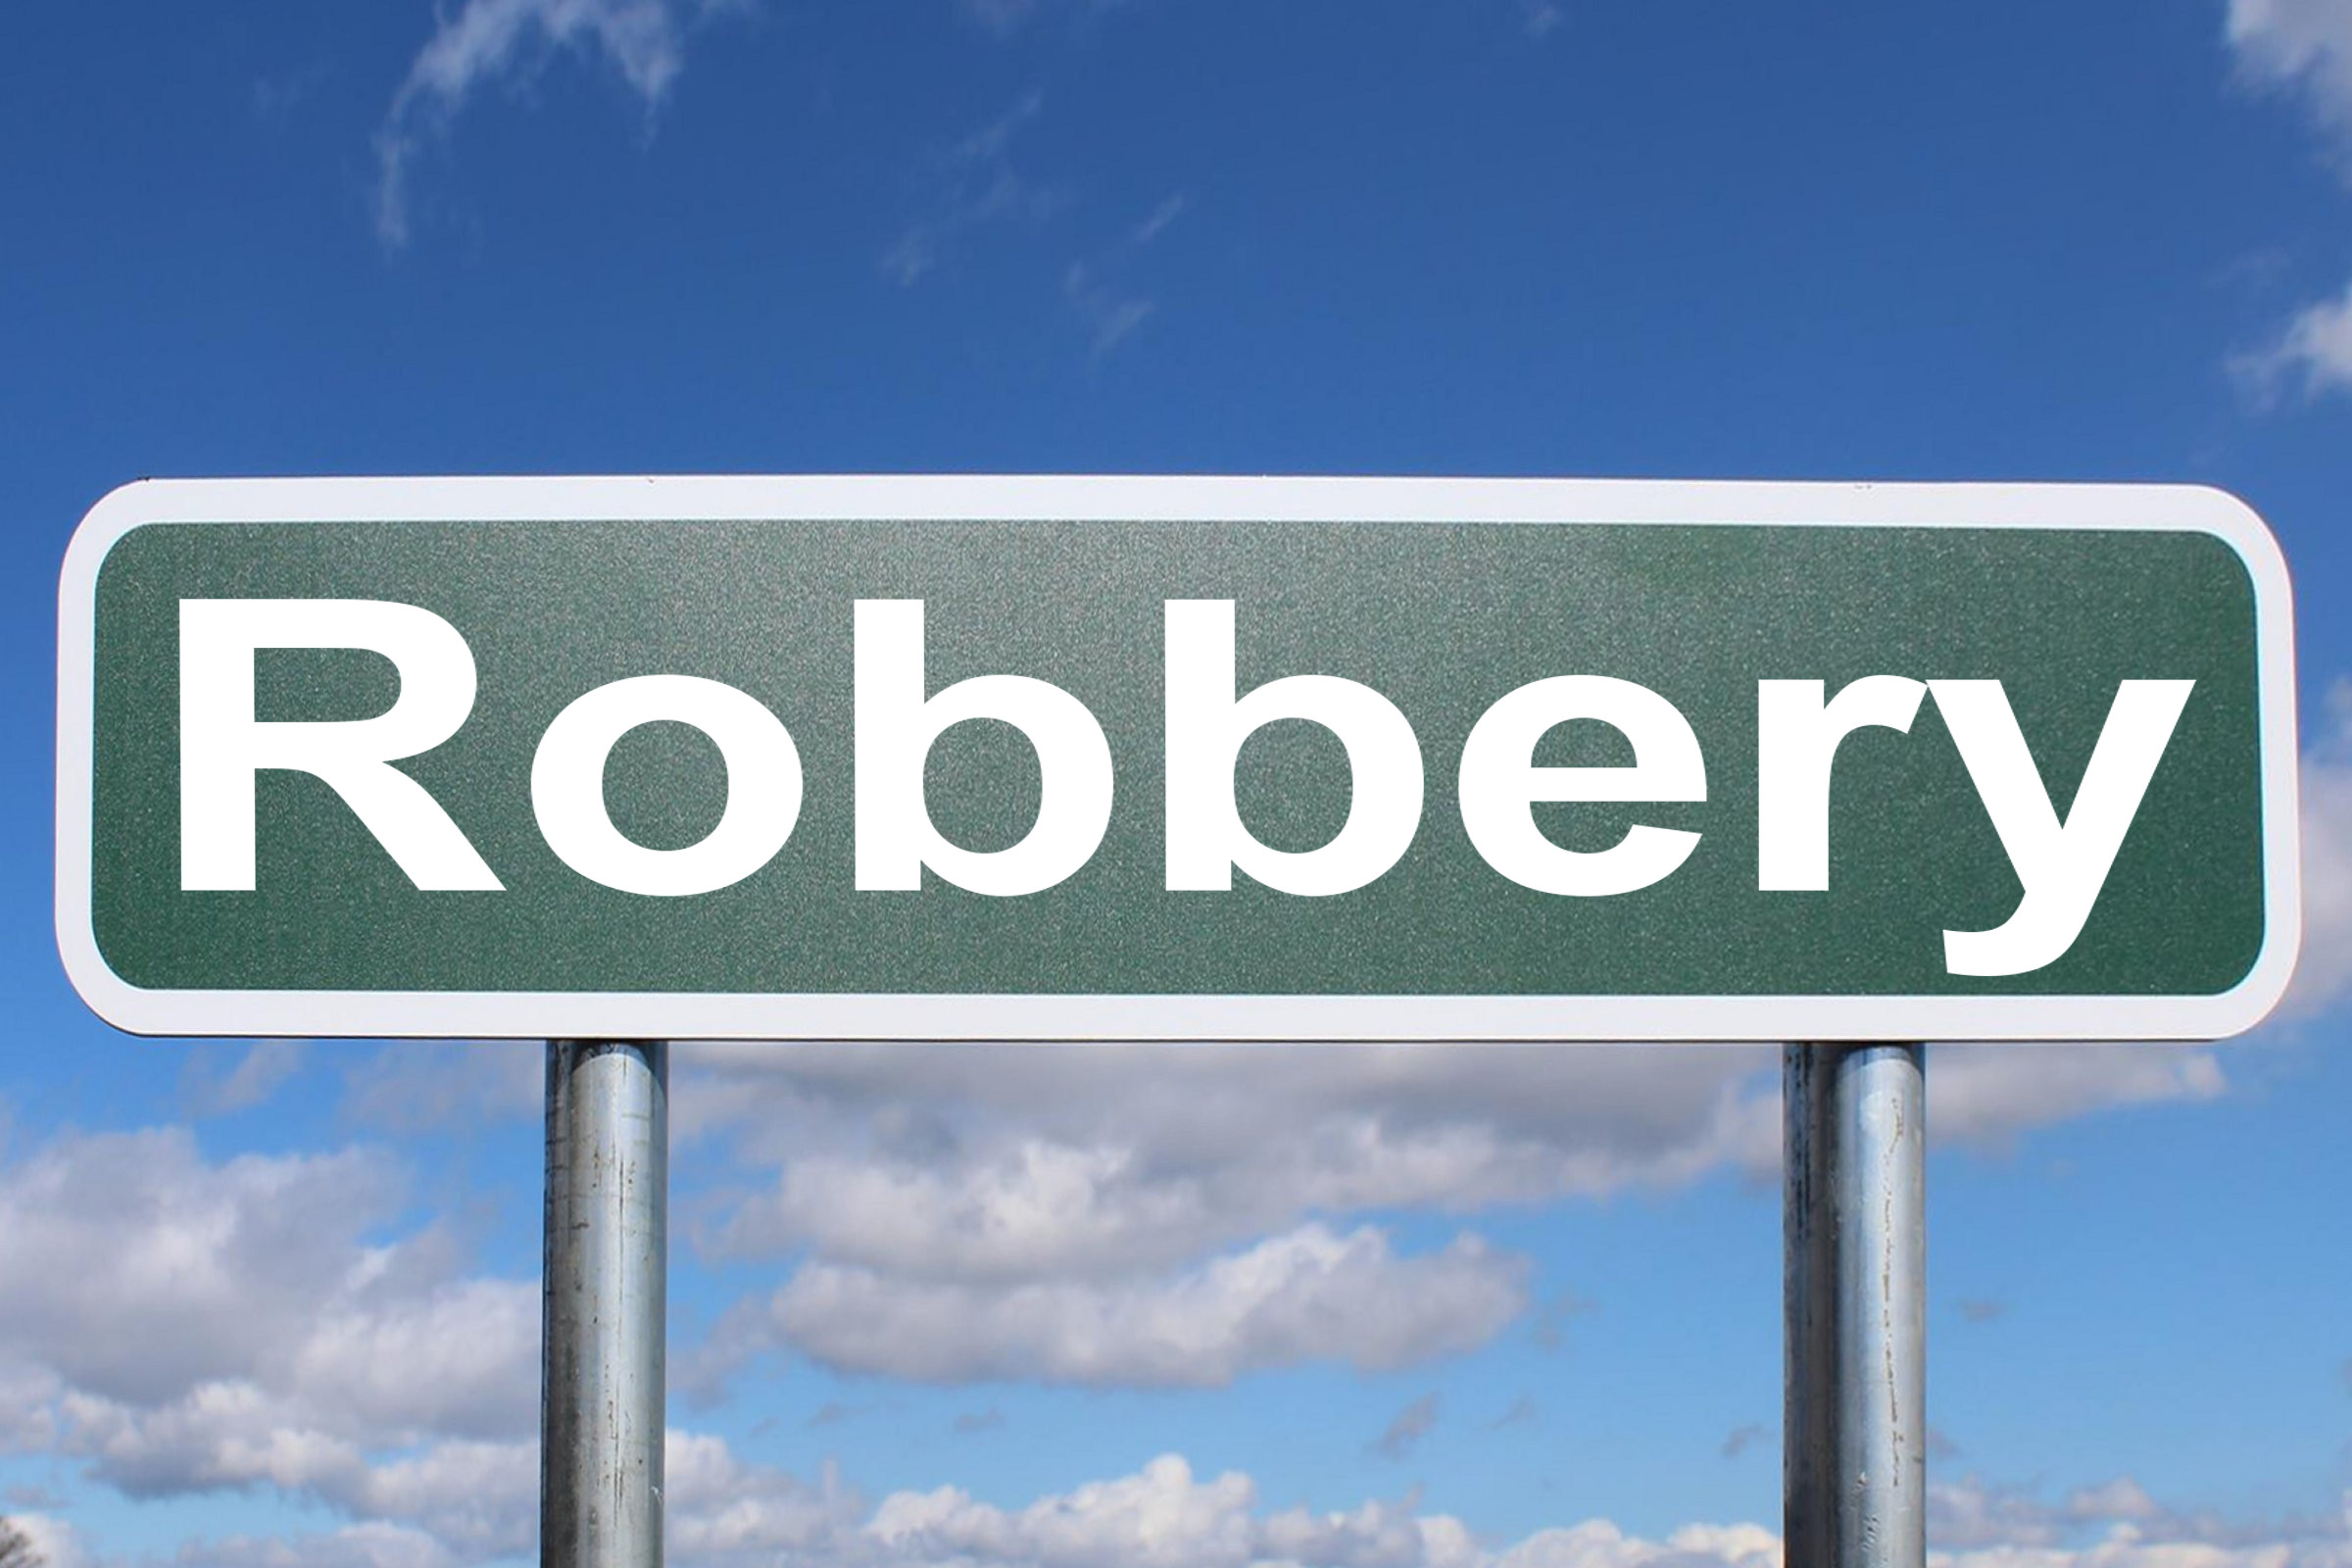 robbery